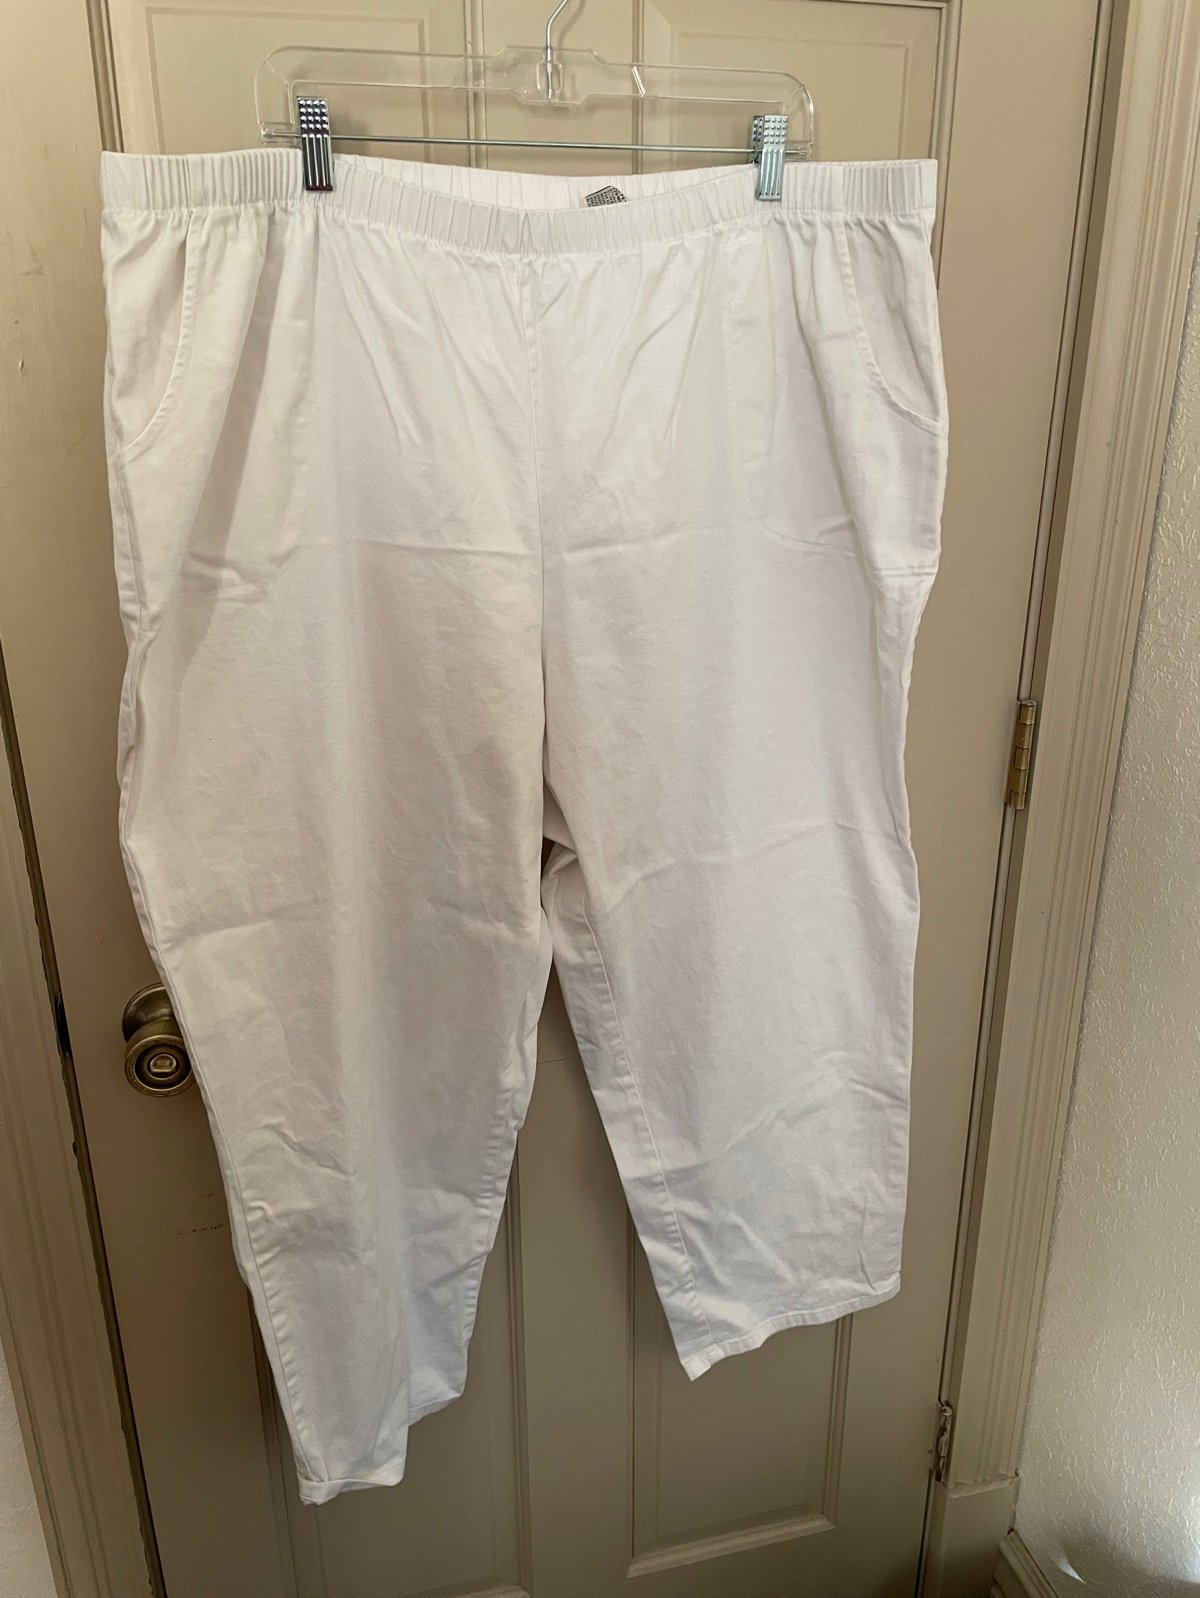 reasonable price Womens Plus Size White Stag White Pants ~ 26/28 Petite MtmVSxZJb Fashion